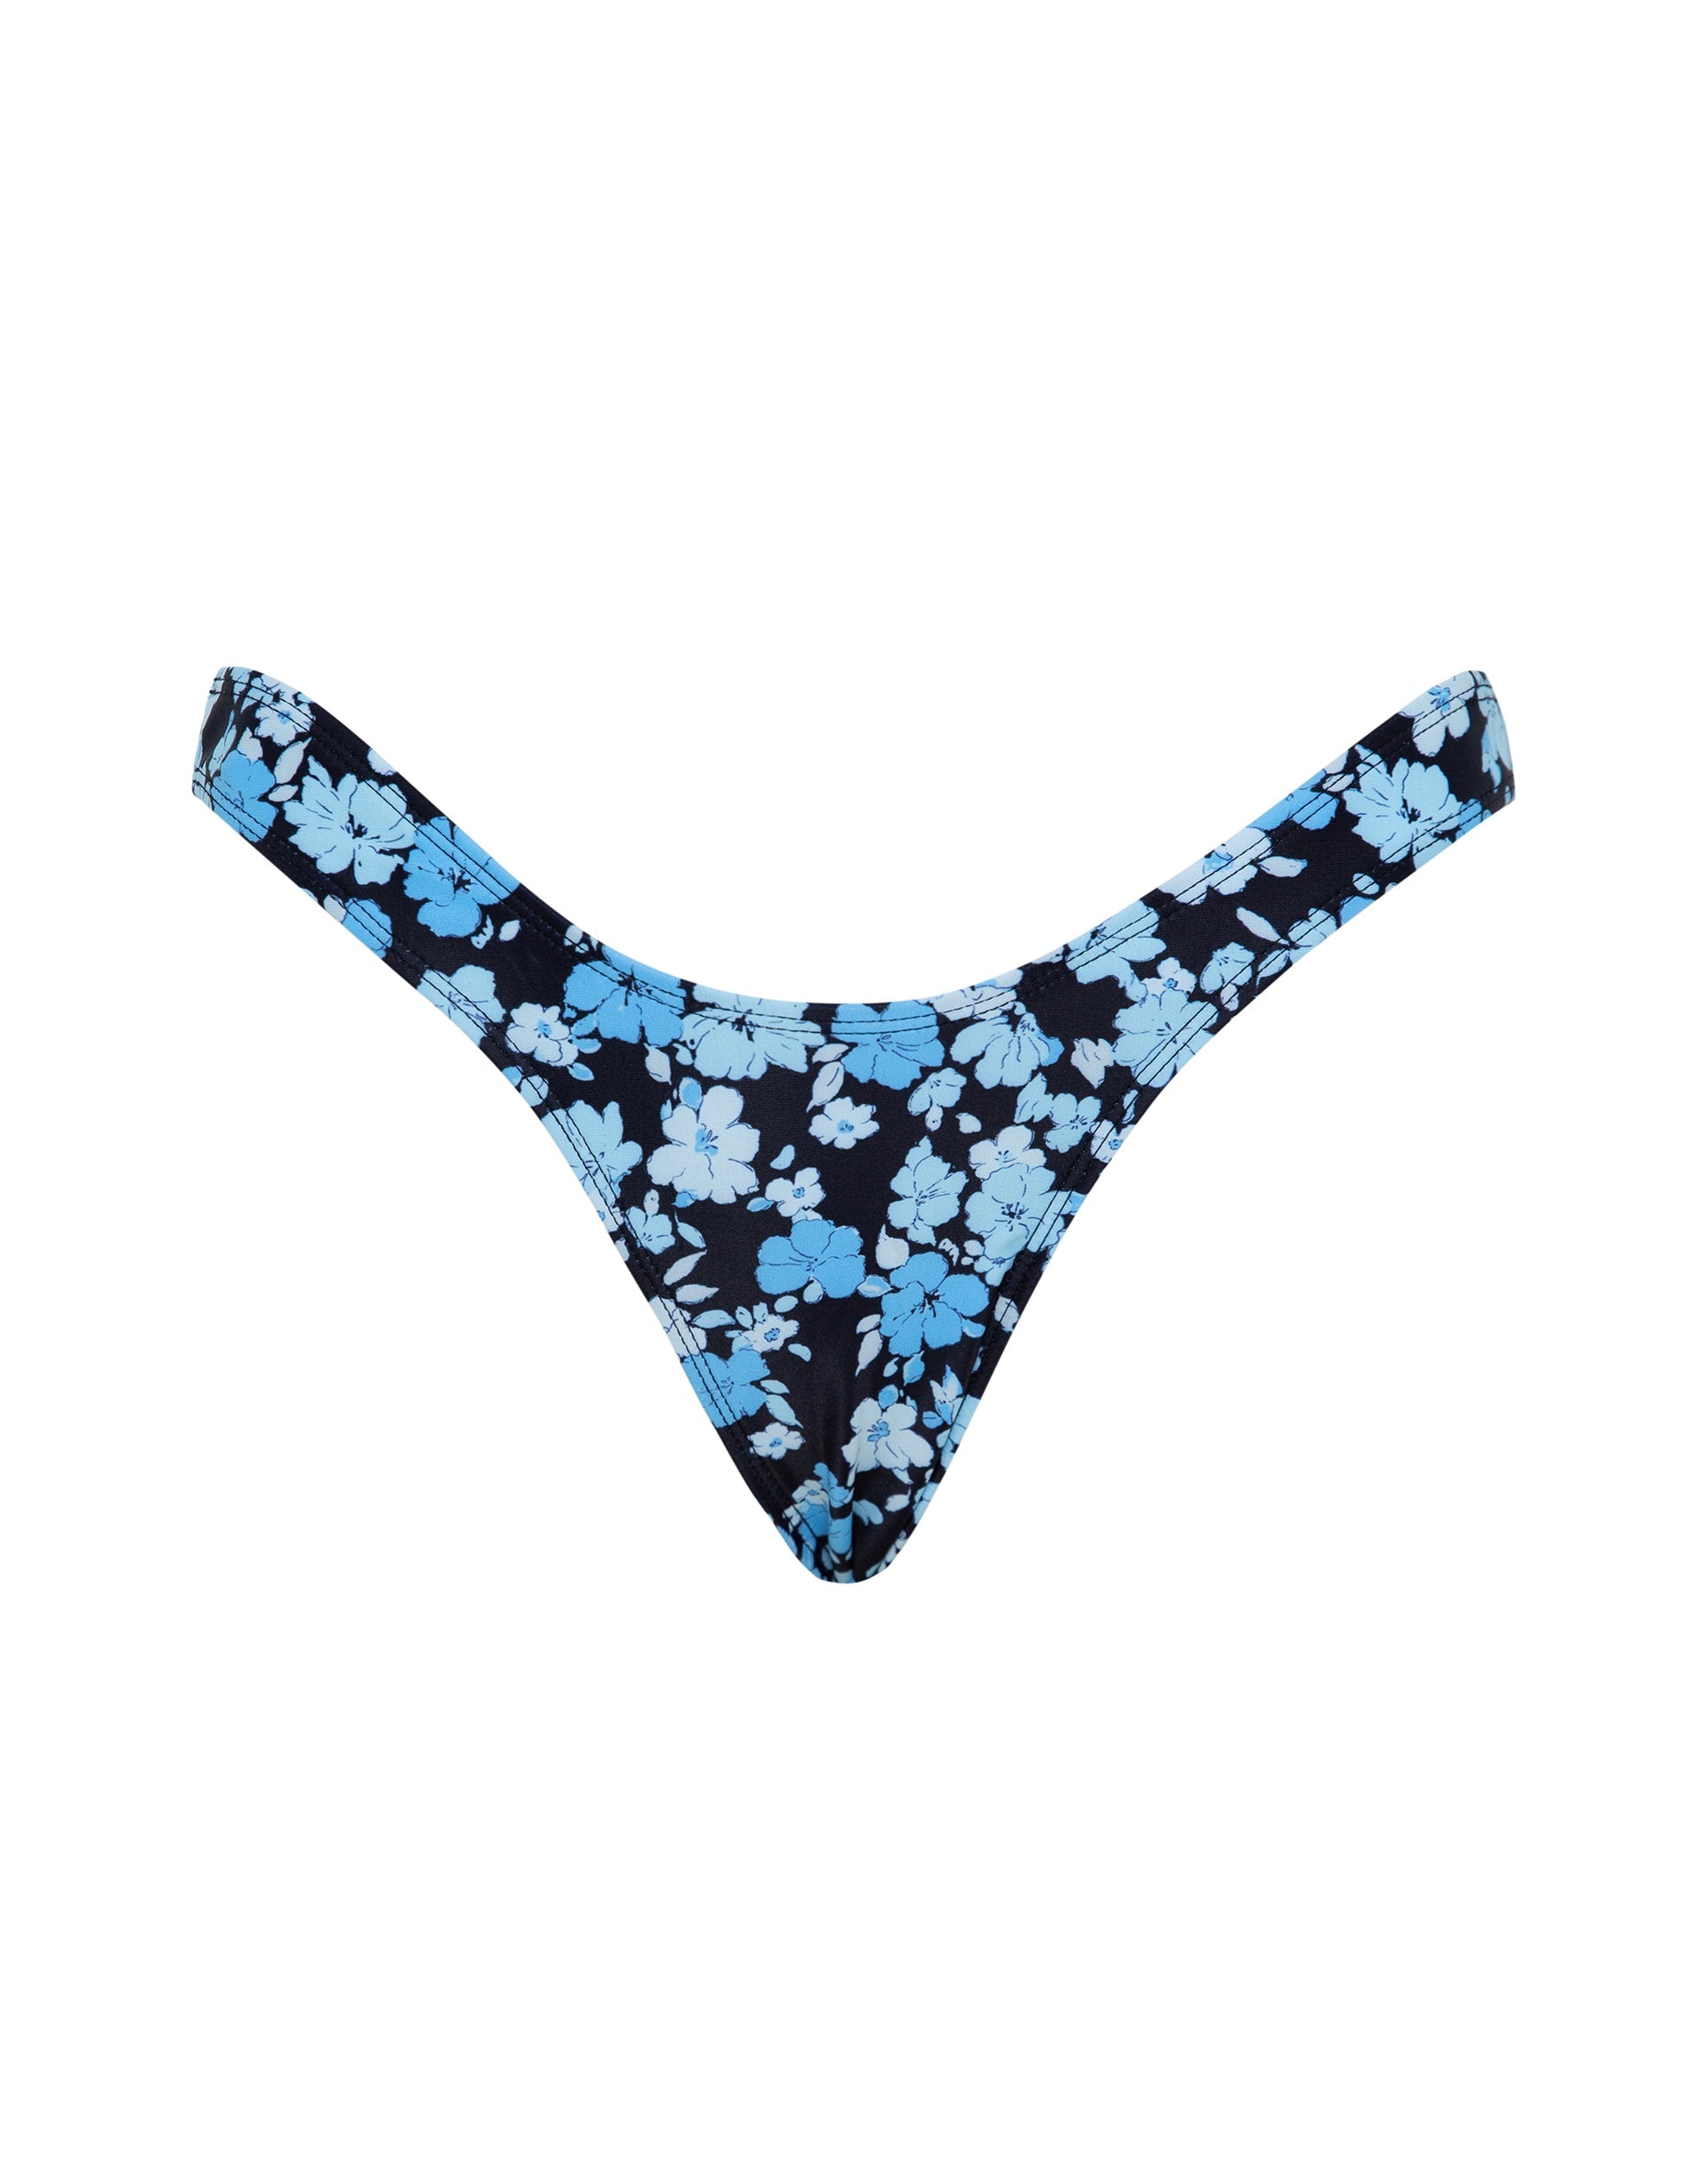 Bild von Farida Bikini Bottom in Pastellblau Floral